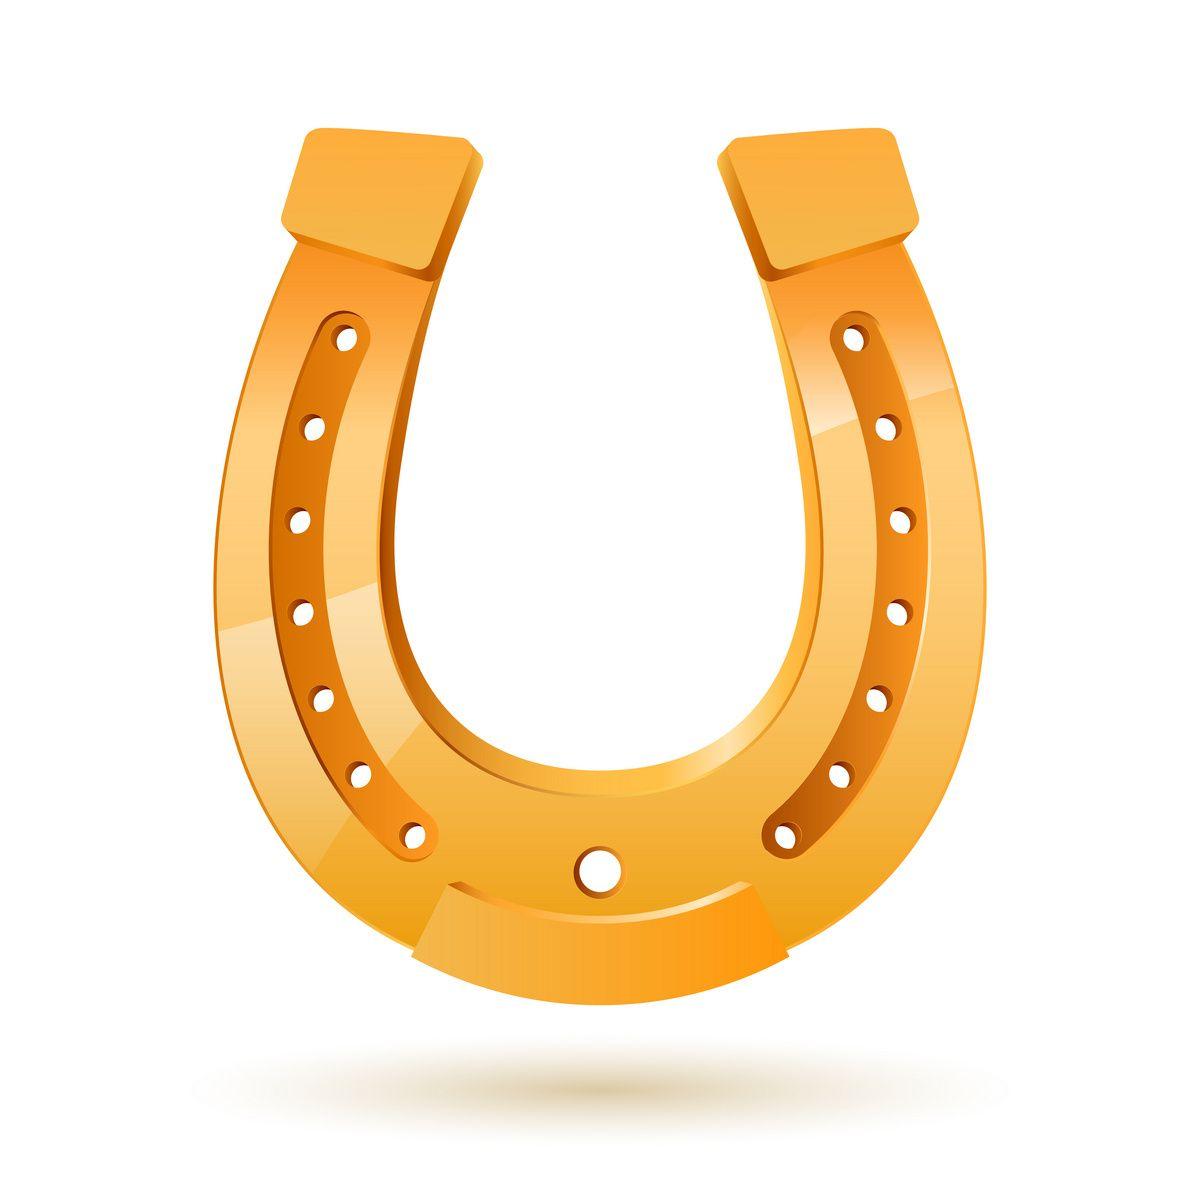 Yellow Horseshoe Logo - Free Horseshoe Images, Download Free Clip Art, Free Clip Art on ...